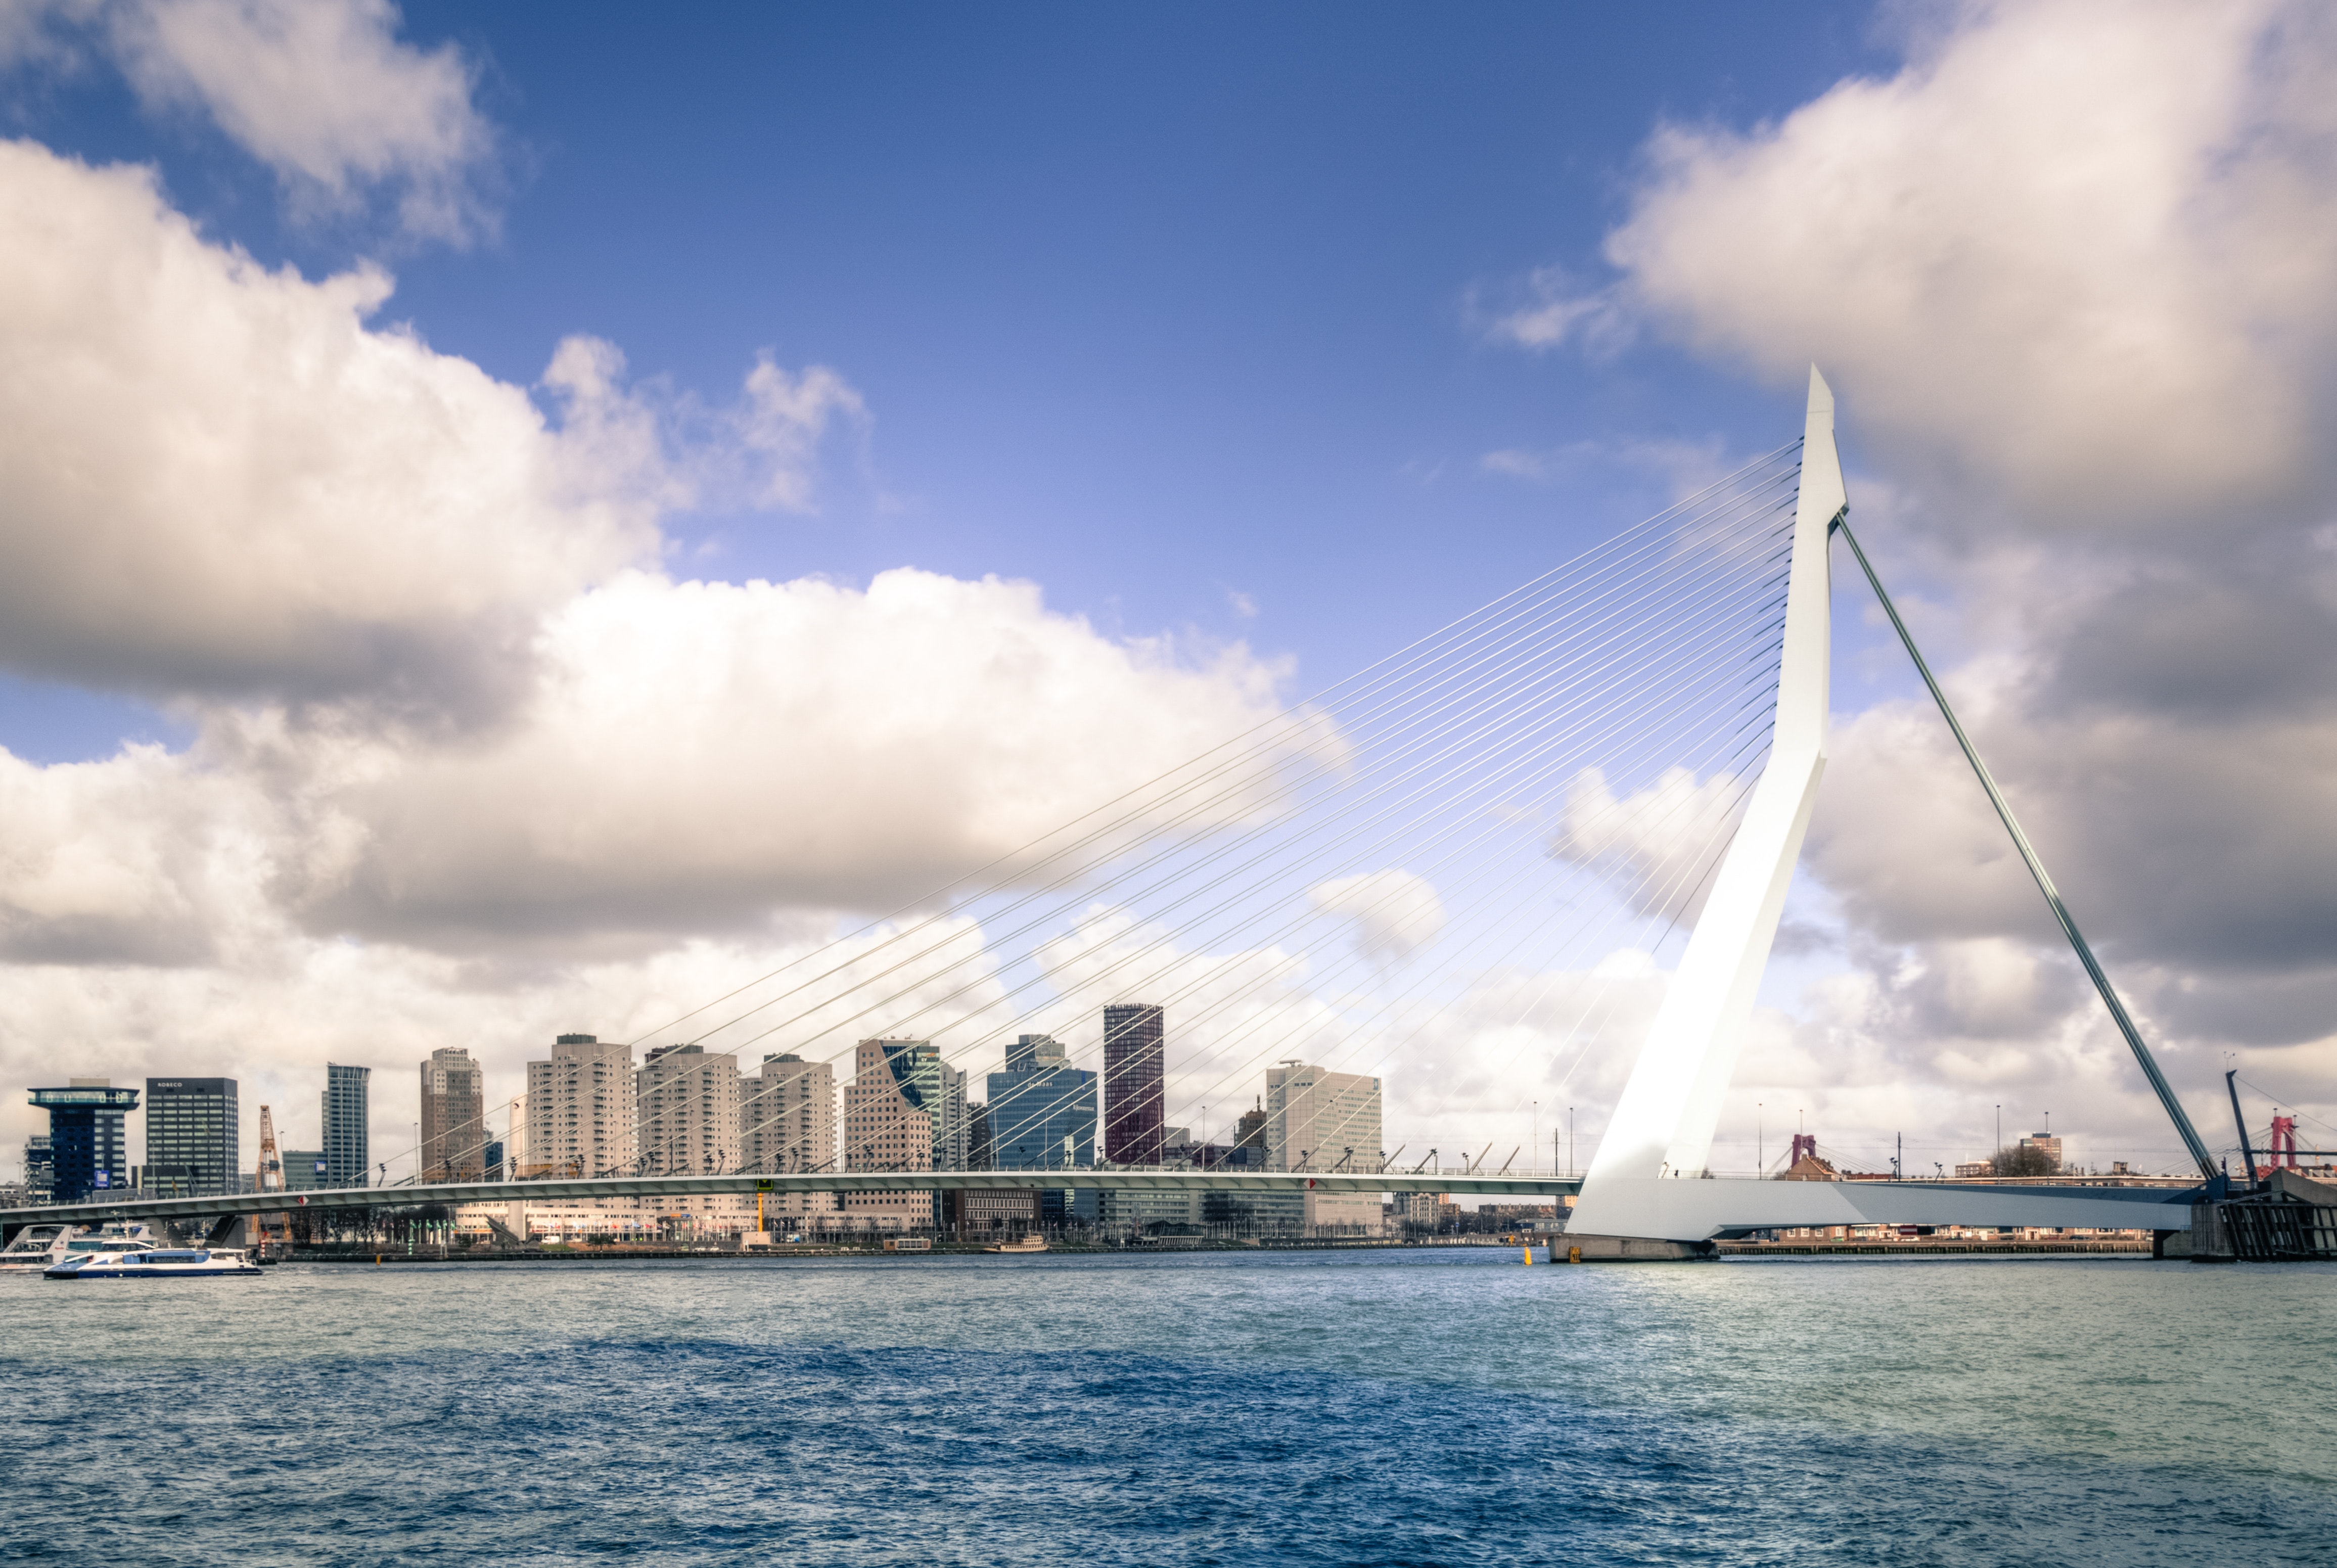 Skyline of Rotterdam with the Erasmusbridge